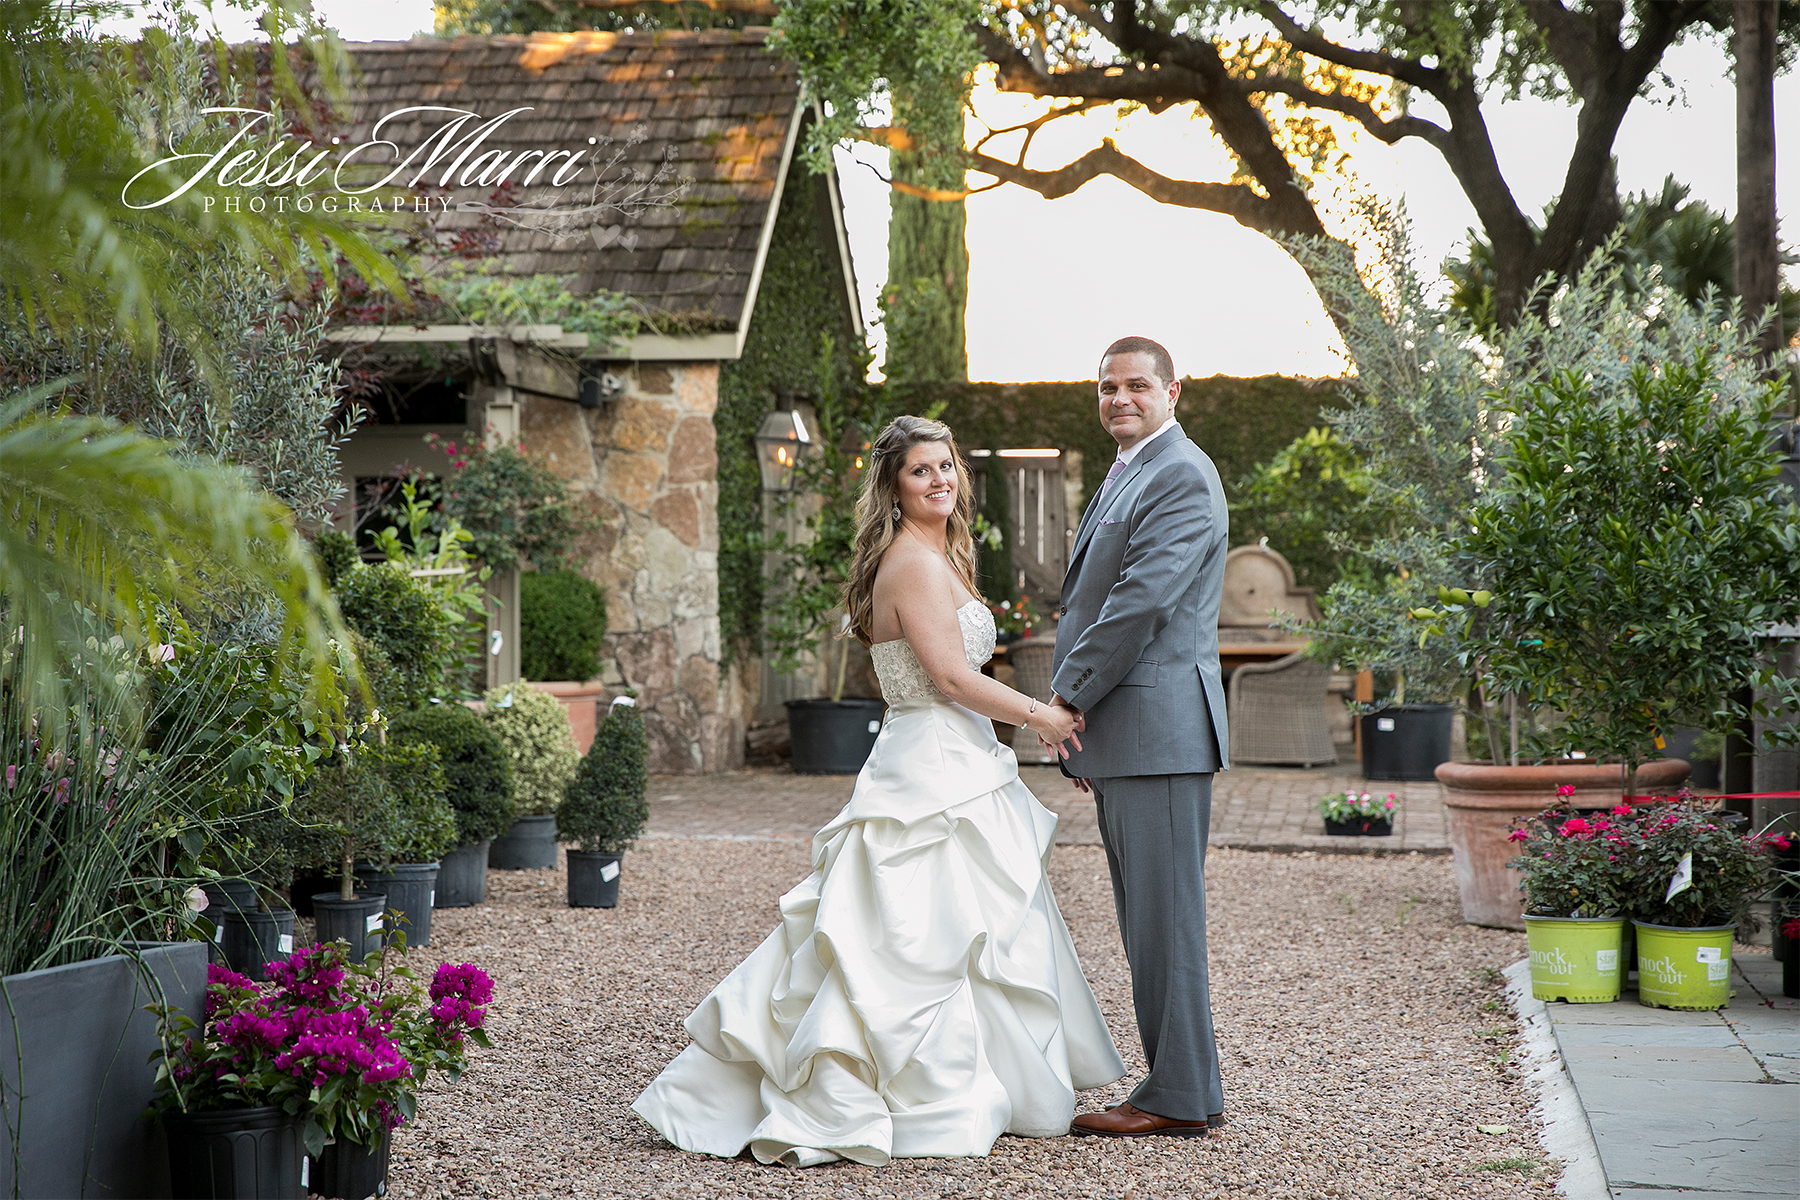 Houston Wedding Photography - Jessi Marri Photography